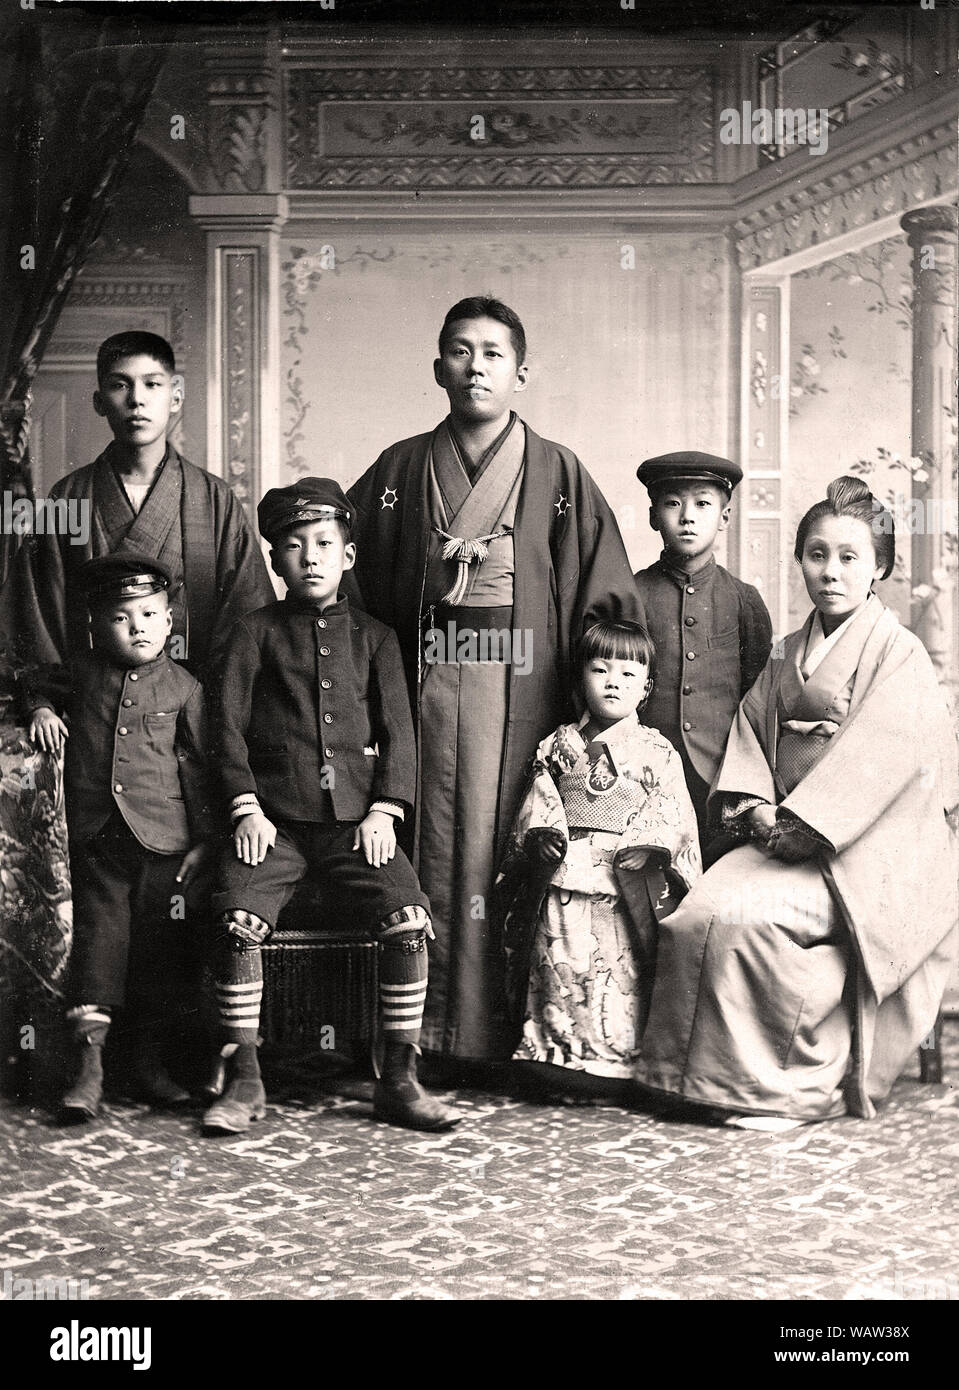 [1910s Japan - japanische Familie] - japanische Familie im Kimono. 20. Jahrhundert vintage Silbergelatineabzug. Stockfoto